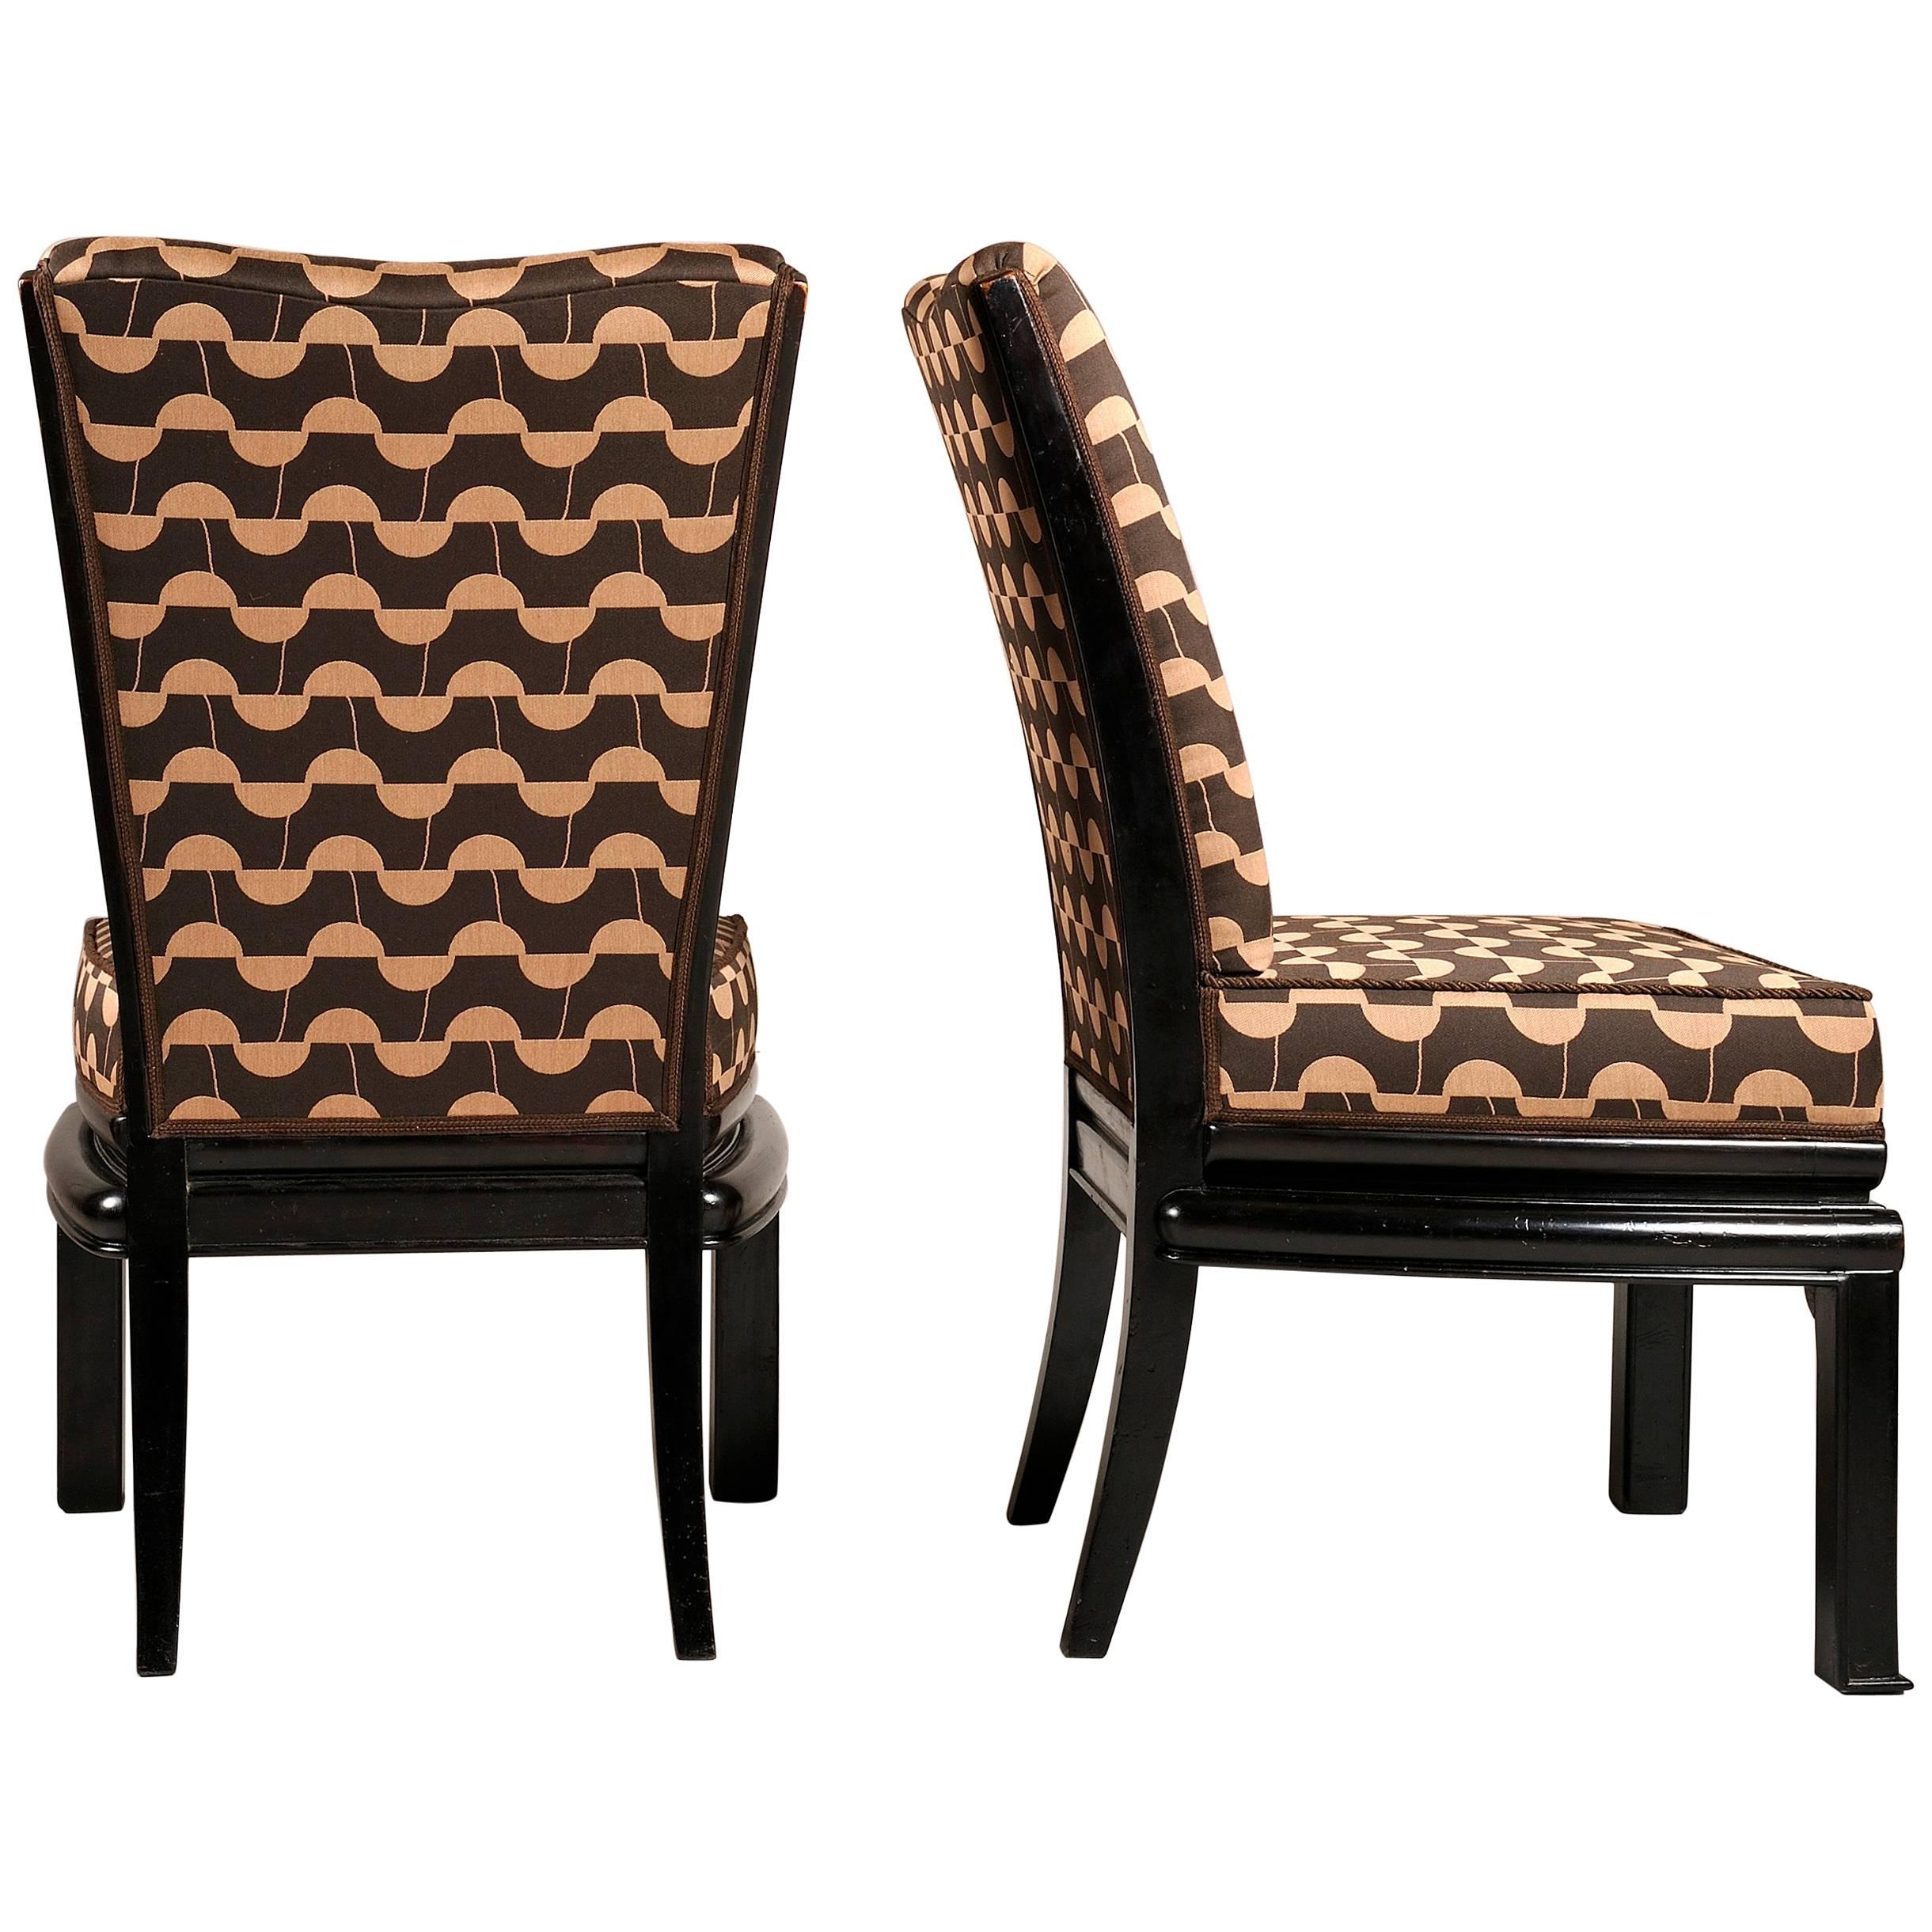 Pair of Rondocubist Chairs Designed by Czech Architect Josef Gočár